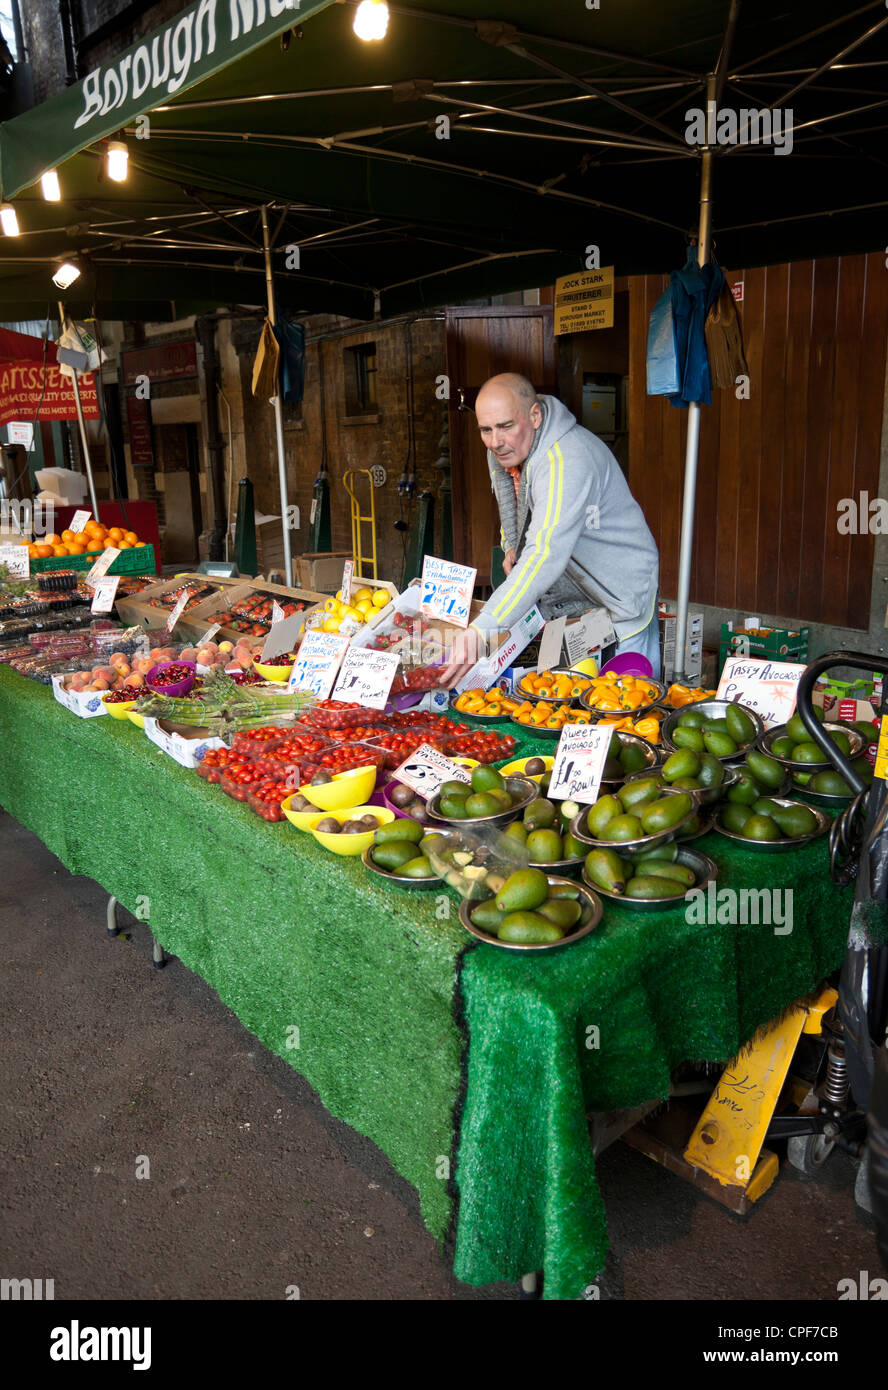 Greengrocer's stall, Borough Market, London, England, UK Stock Photo